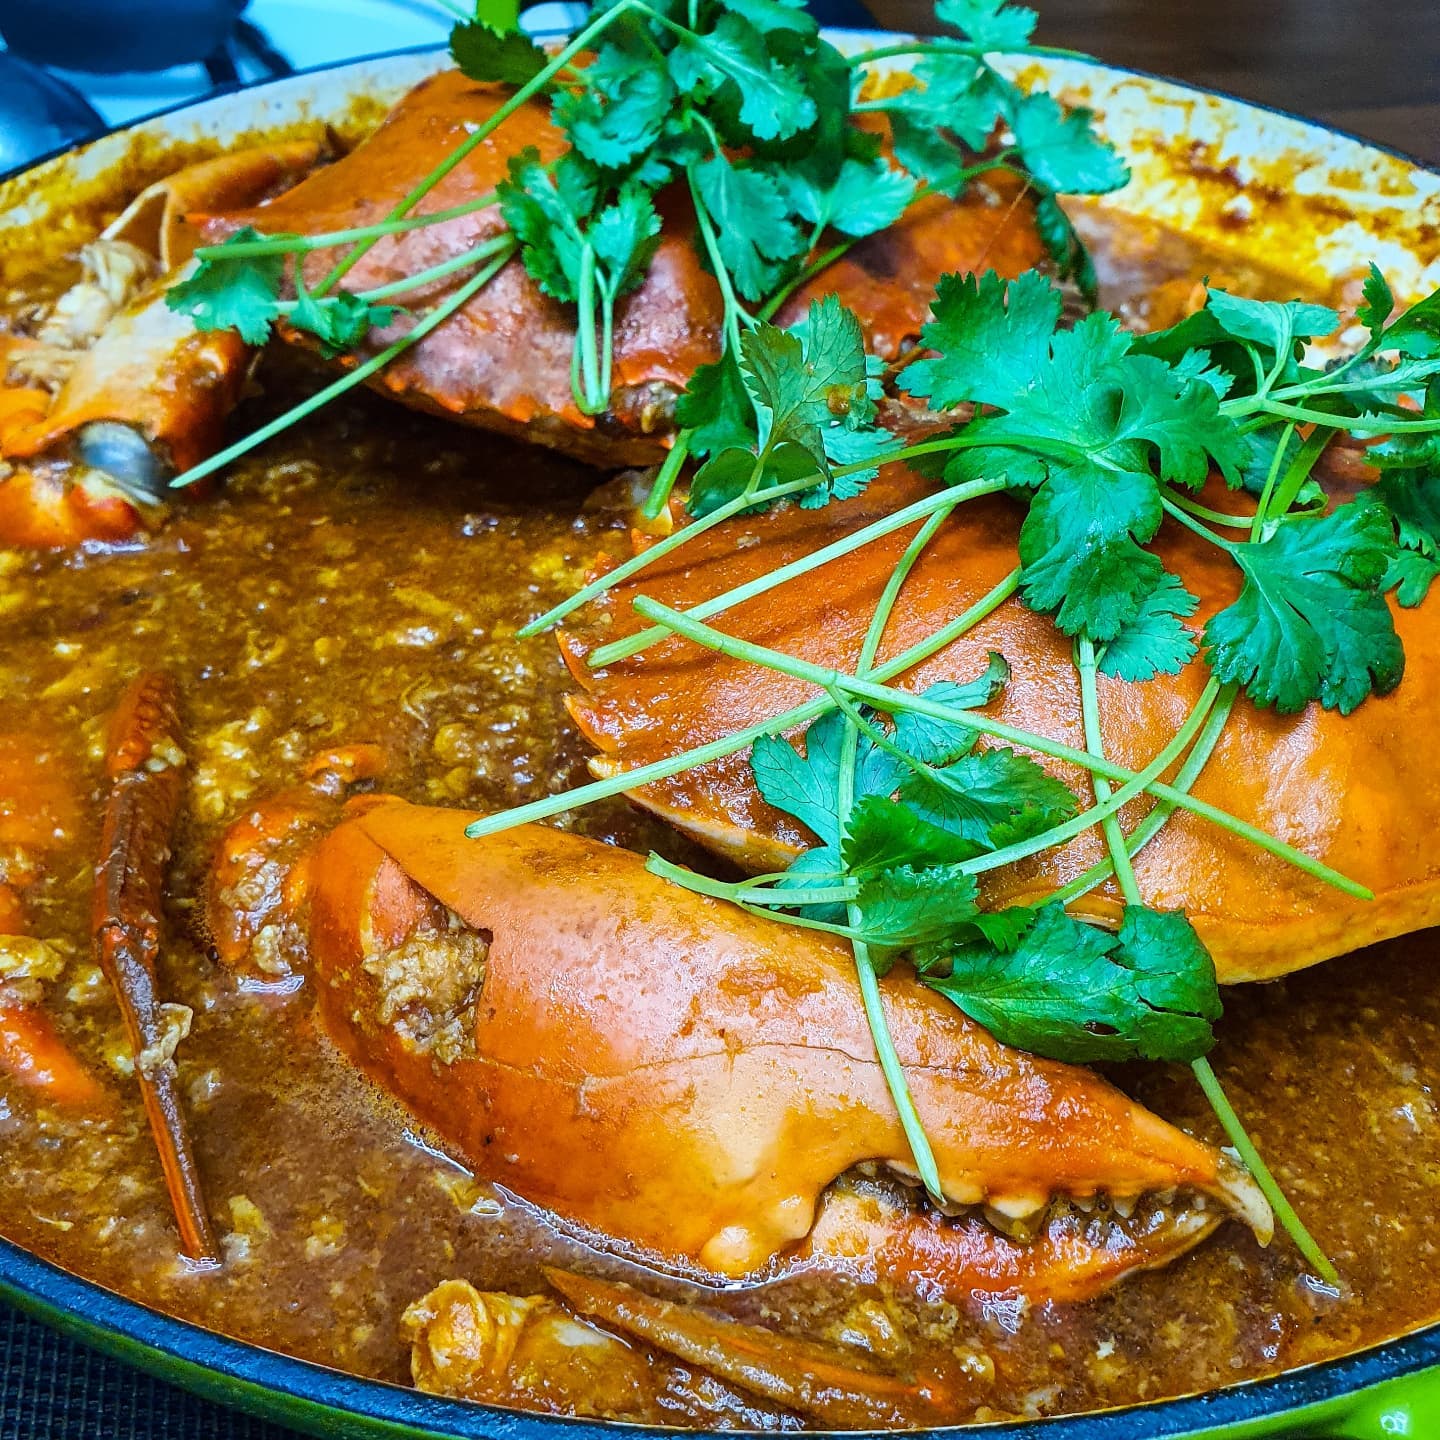 Singapore Chili Crabs